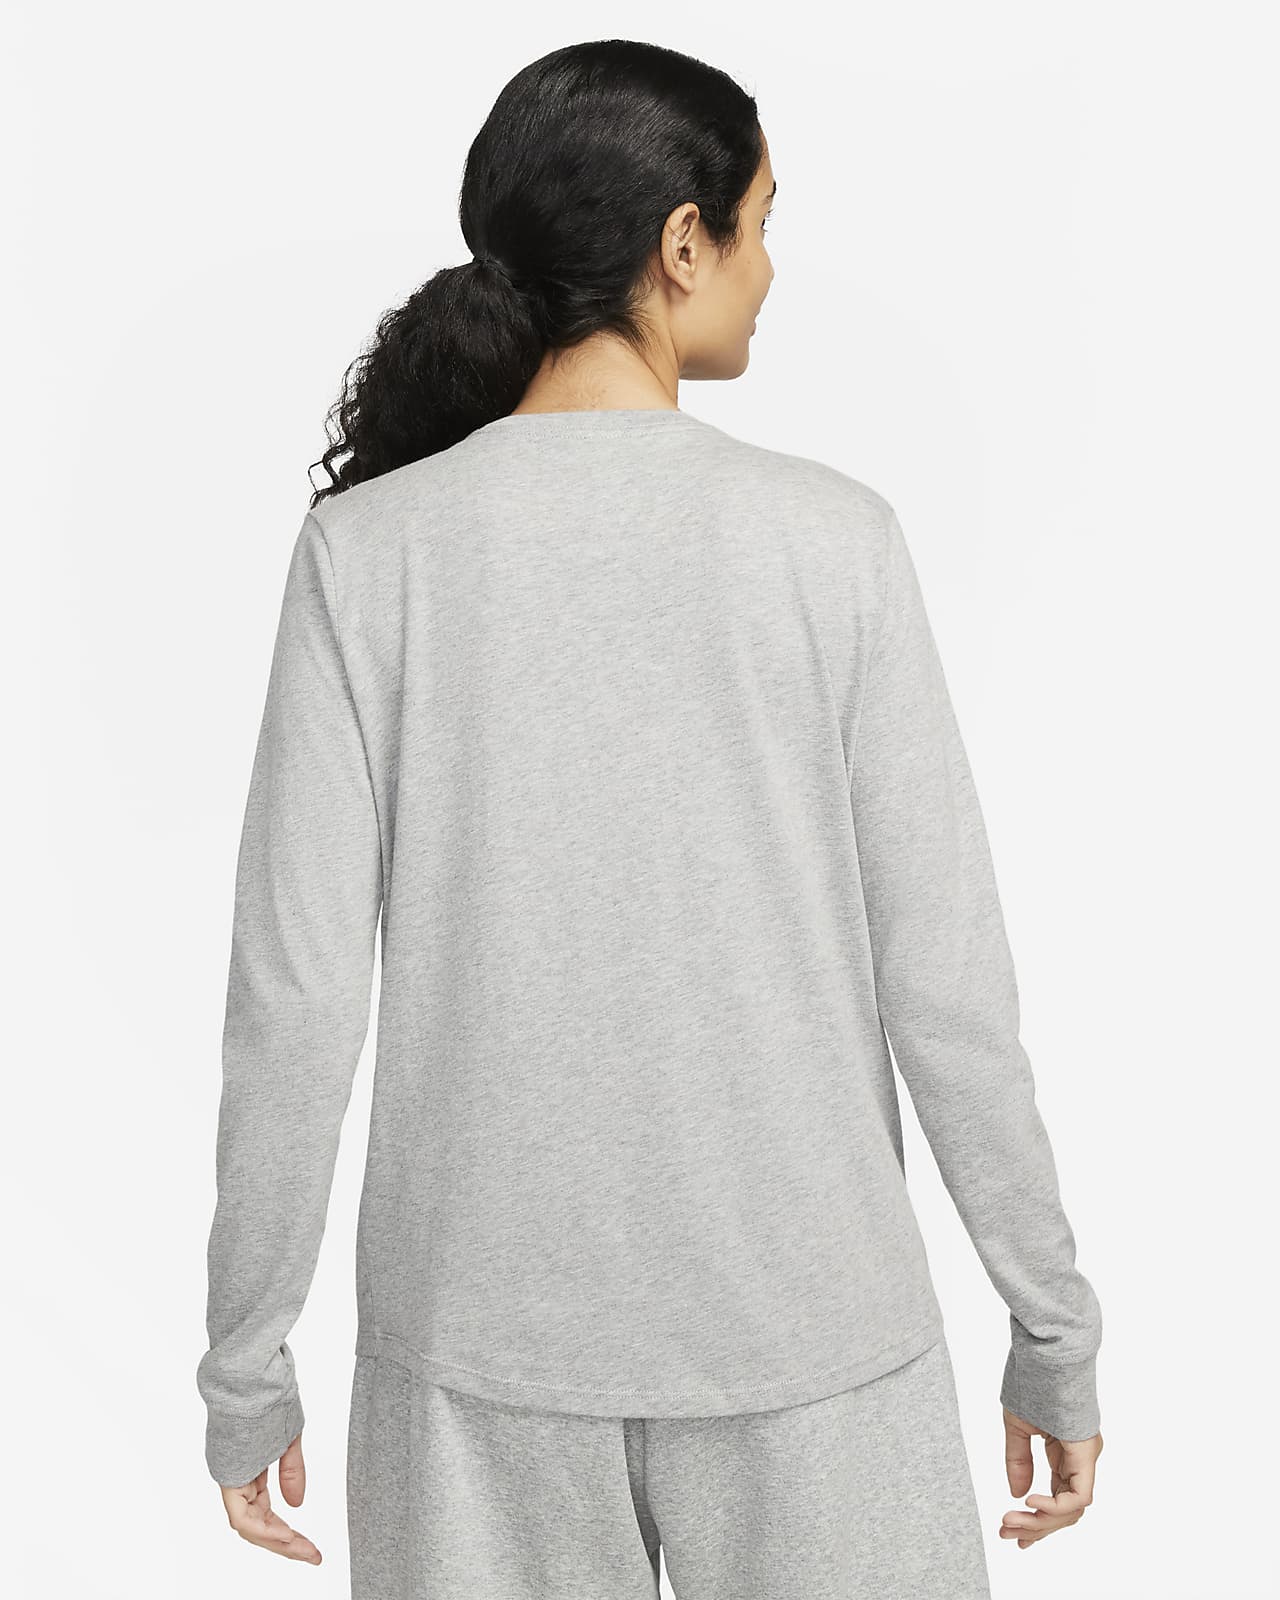 Nike Sportswear Essentials Women's Long-Sleeve Logo T-Shirt.